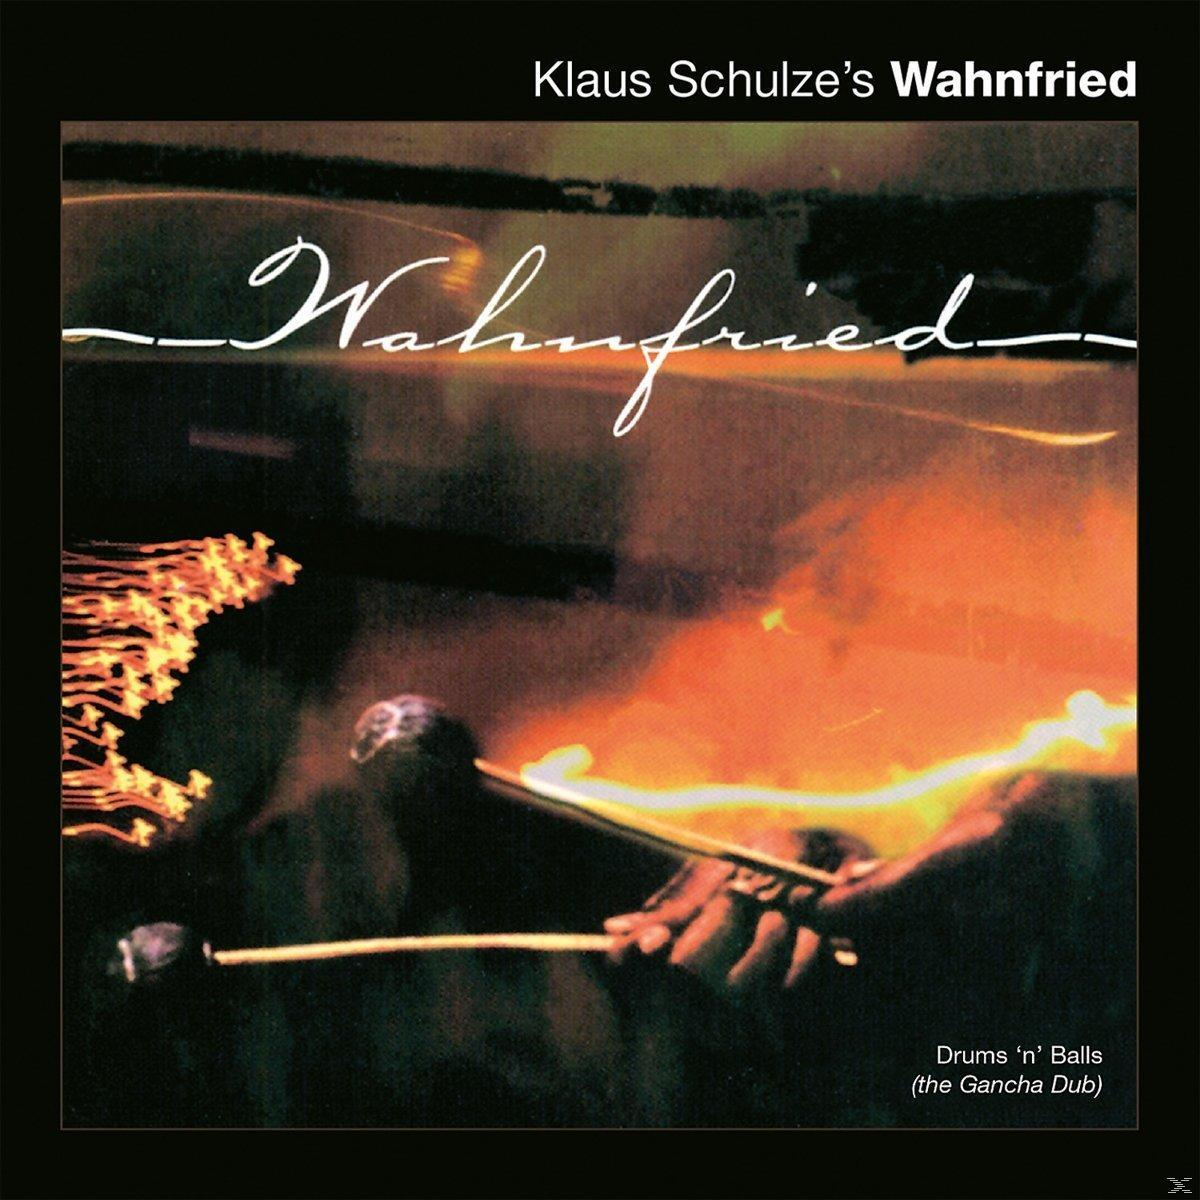 (CD) Drums\'n\'balls - Gancha - Klaus Schulze (The Club)